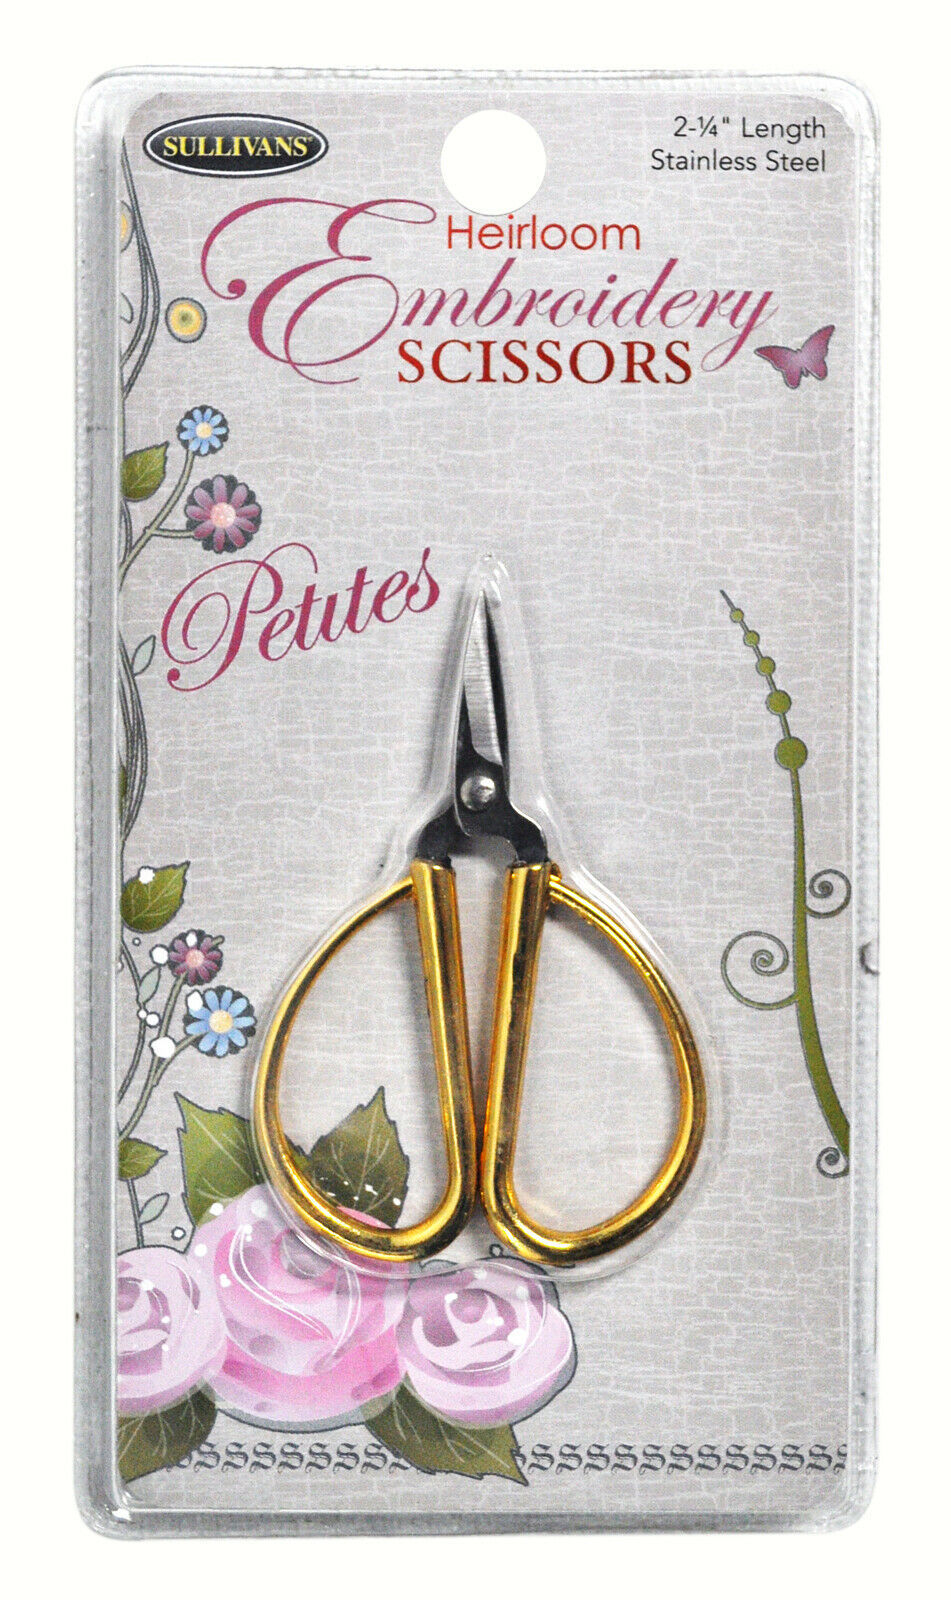 Sullivans Petites Heirloom Embroidery Scissors Gold - $9.86